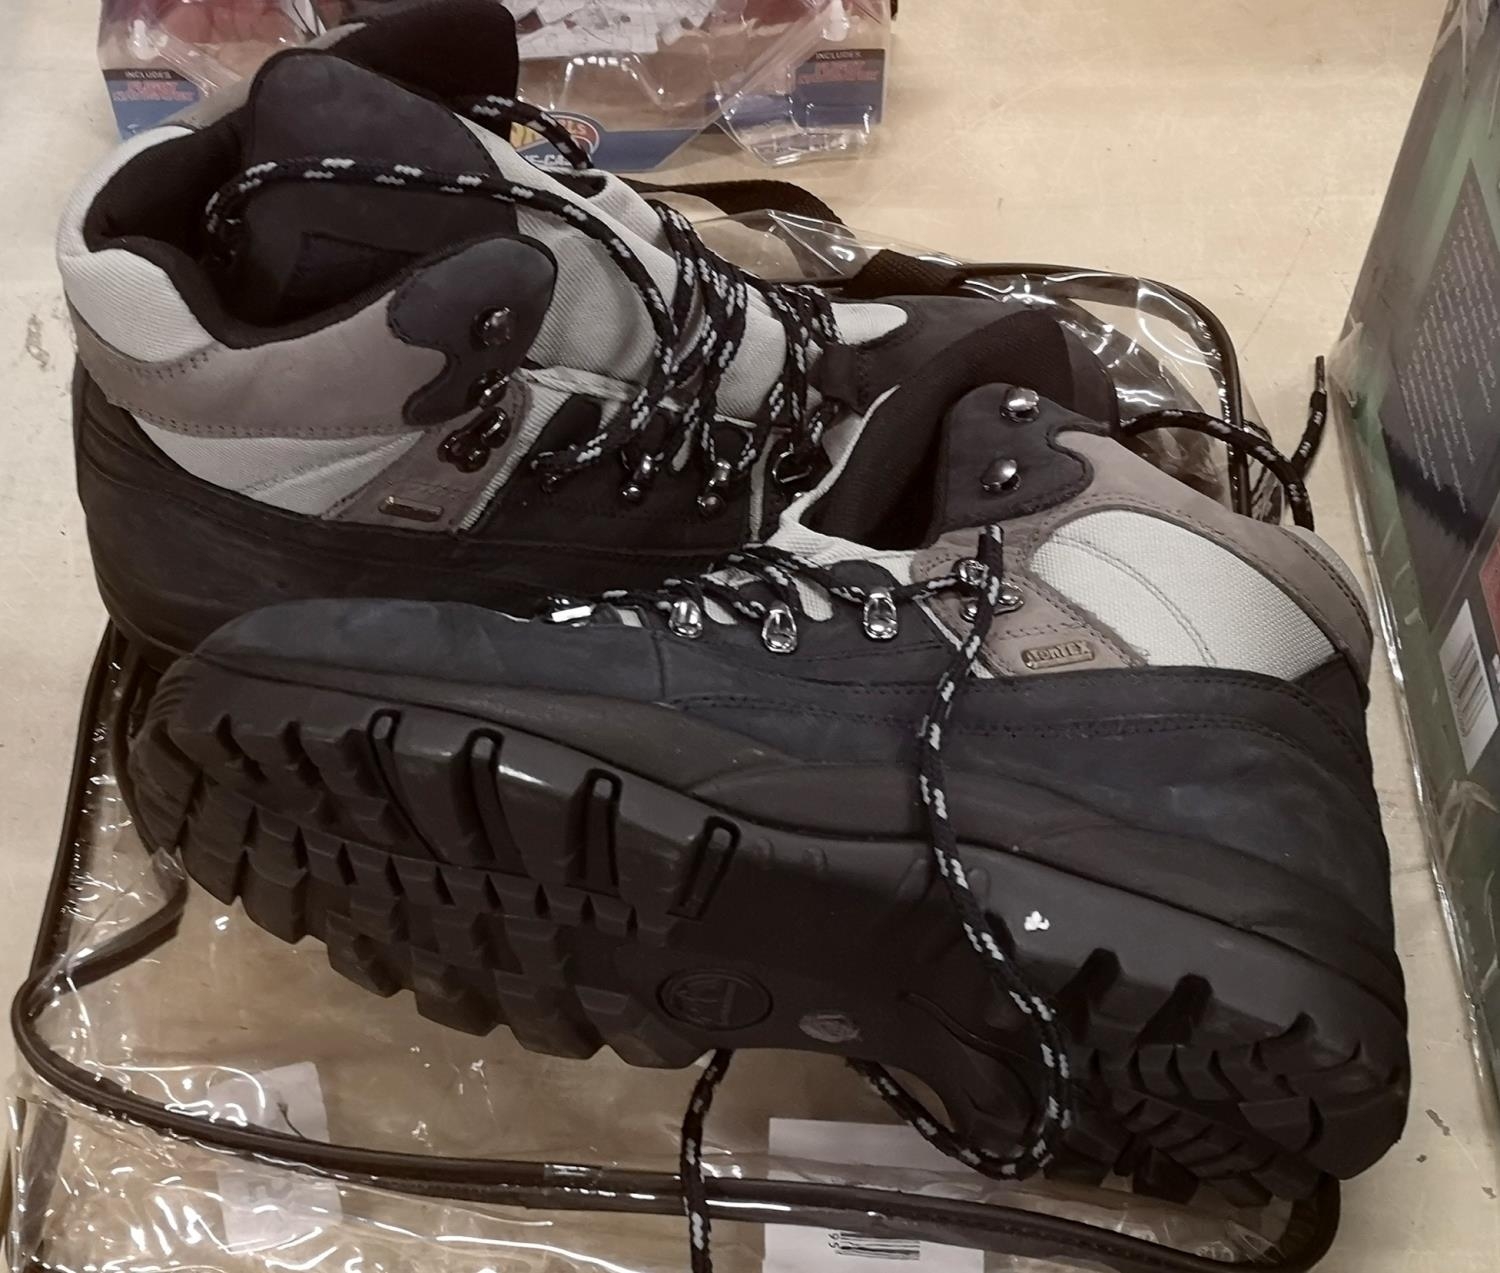 tetraeder Flåde høst New pair of tentex hiking boots size 10